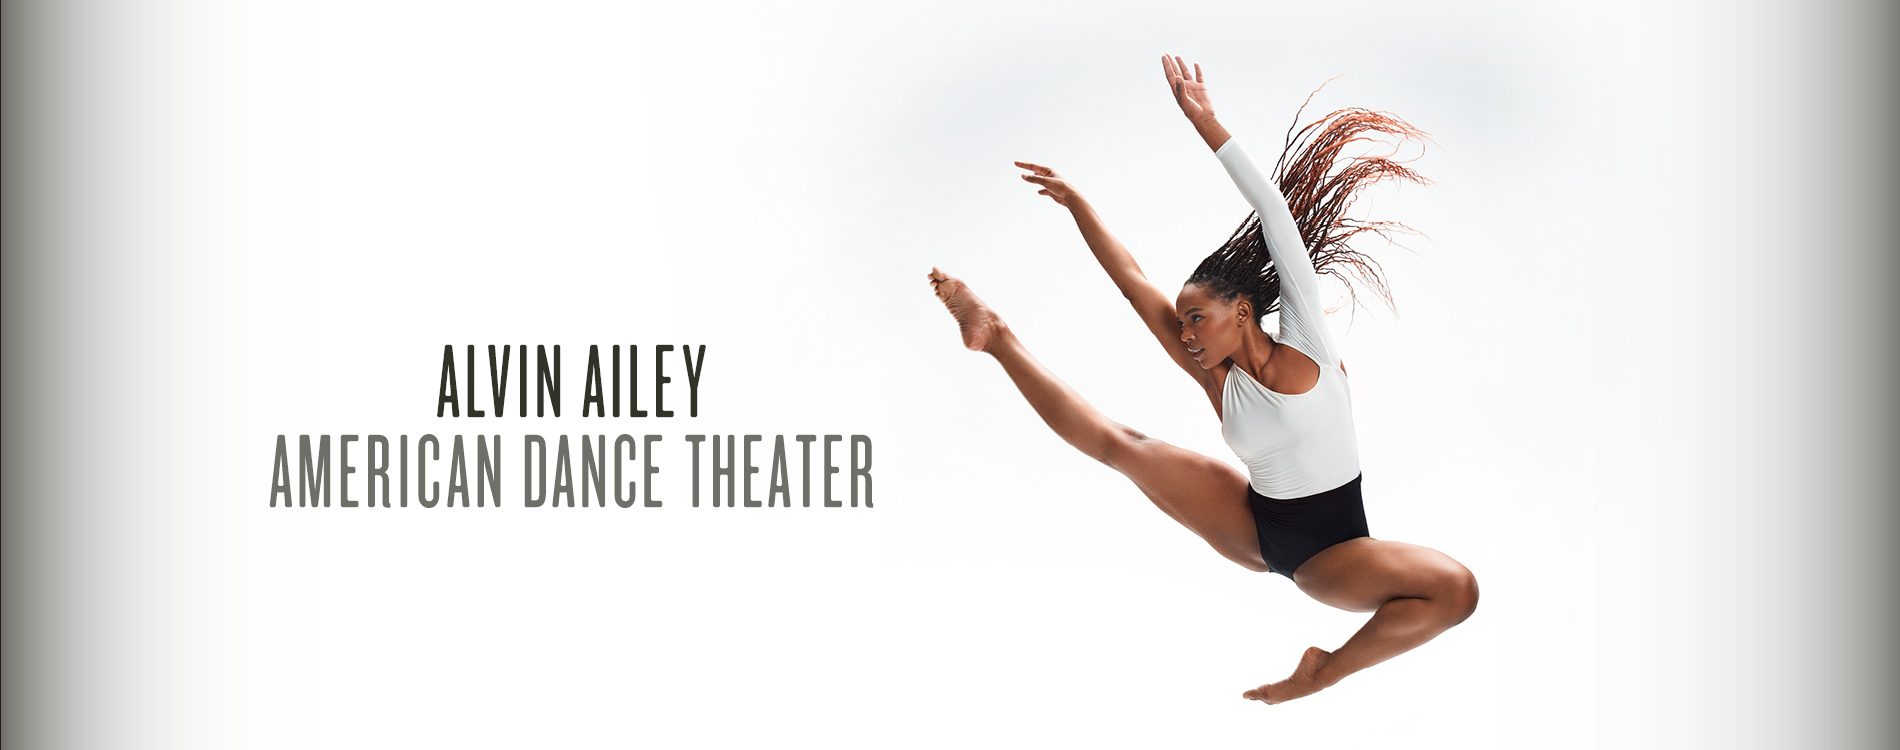 Alvin Ailey American Dance Theater 4-15